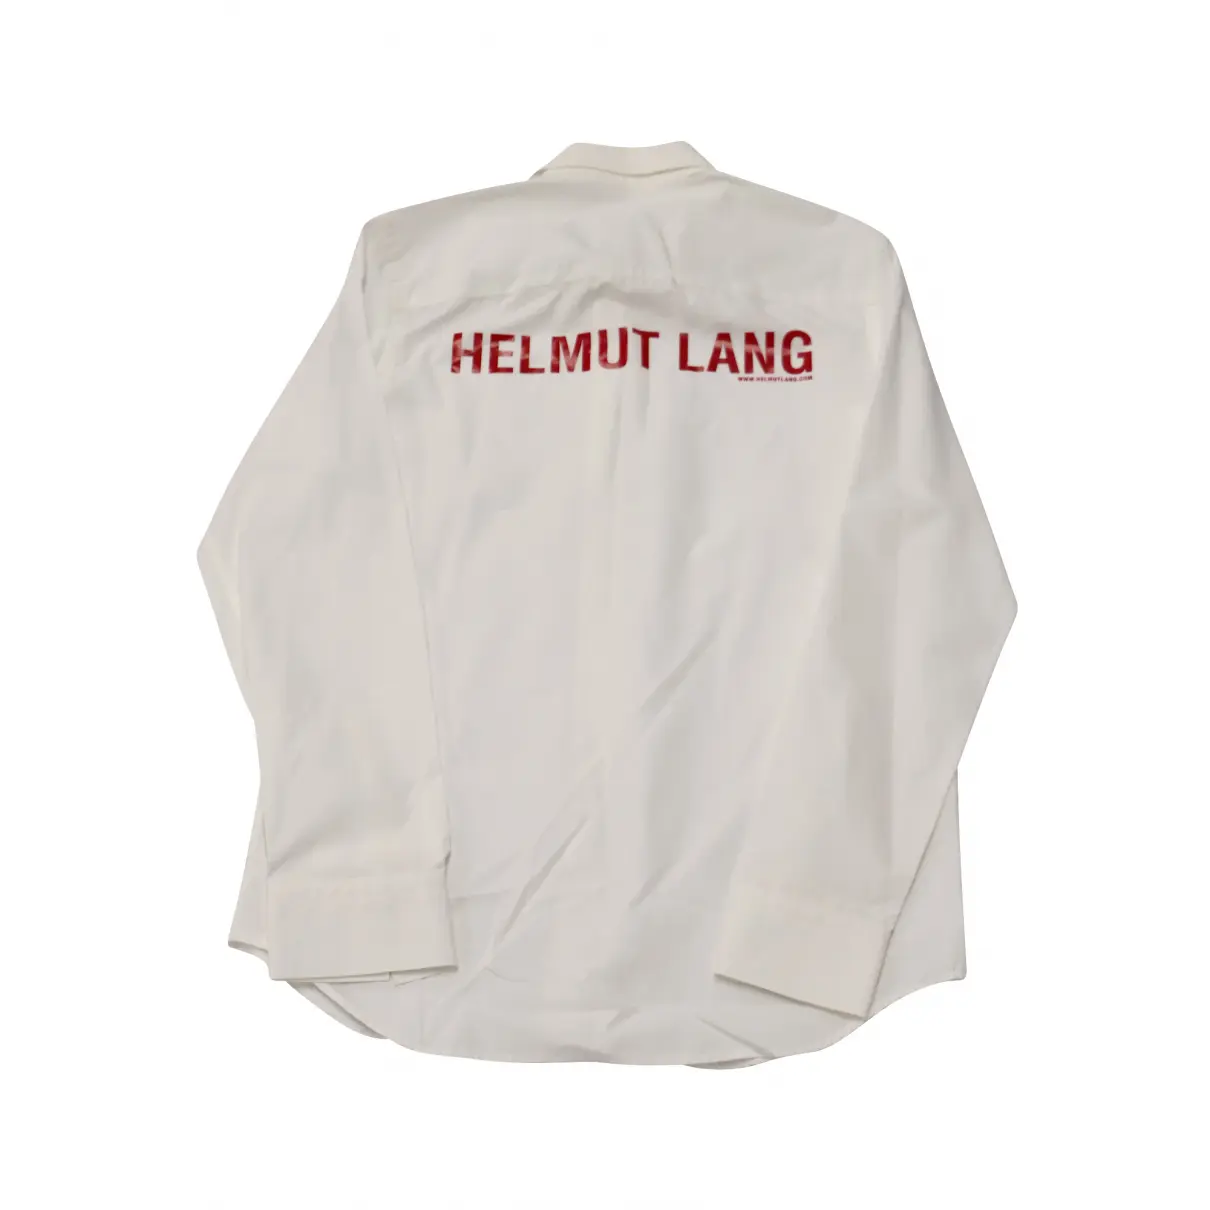 Buy Helmut Helmut Lang Shirt online